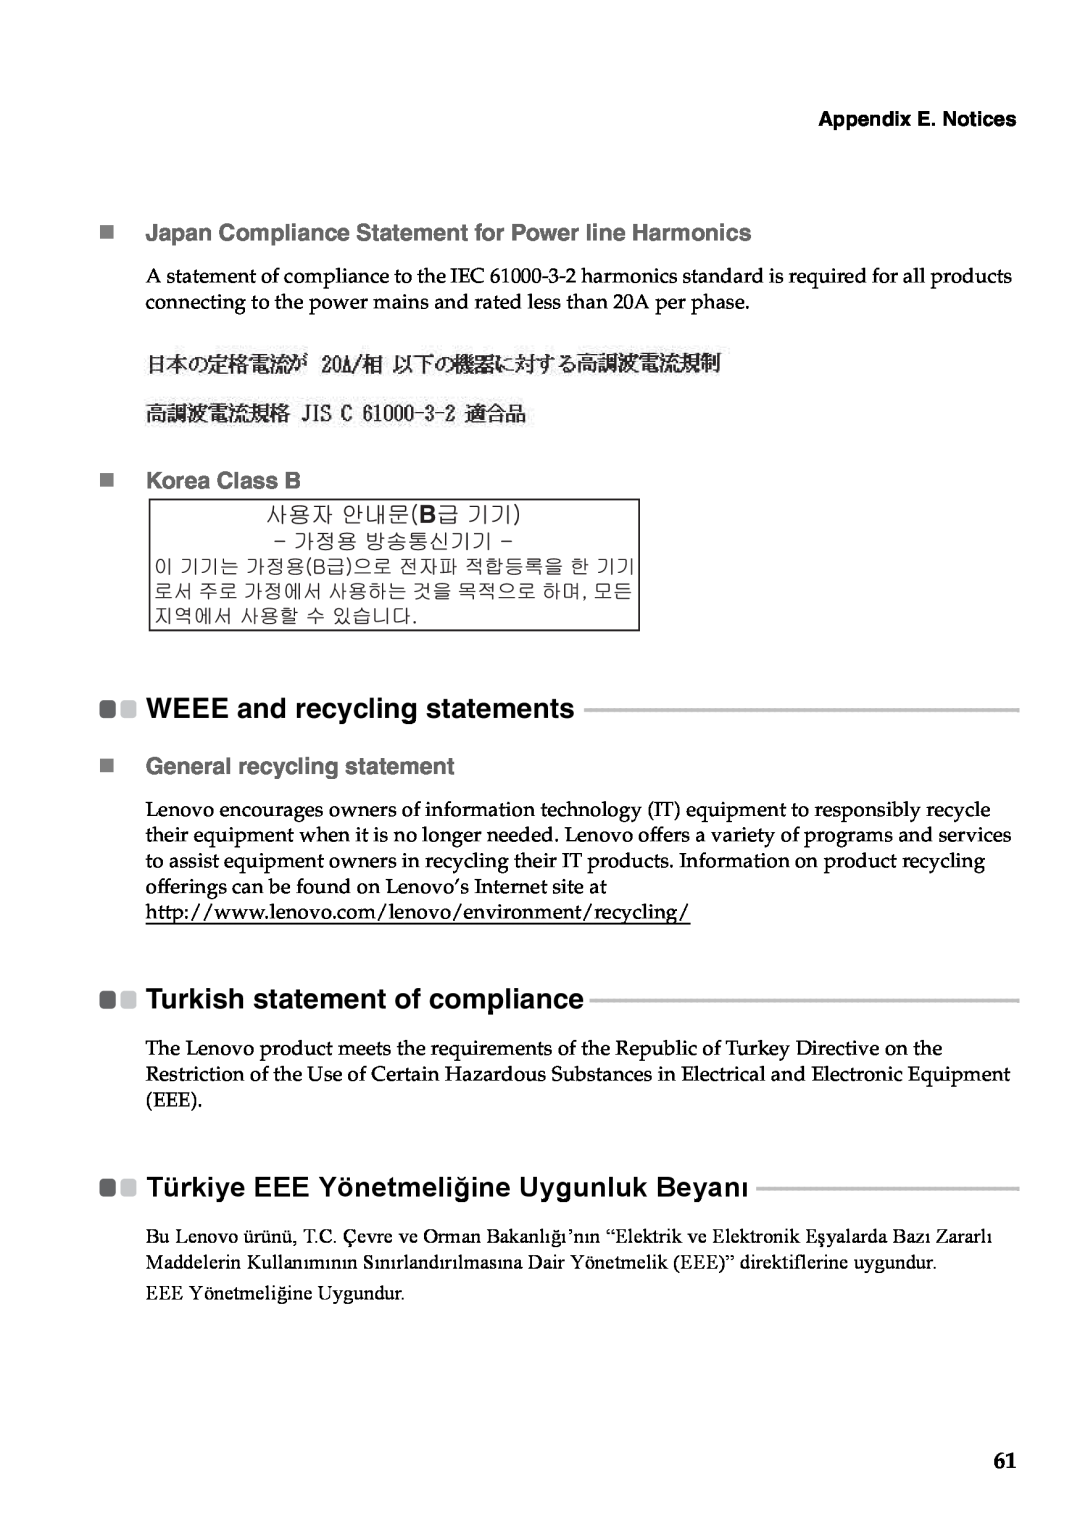 Lenovo B550 Türkiye EEE Yönetmeliğine Uygunluk Beyanı, „Korea Class B, WEEE and recycling statements, Appendix E. Notices 